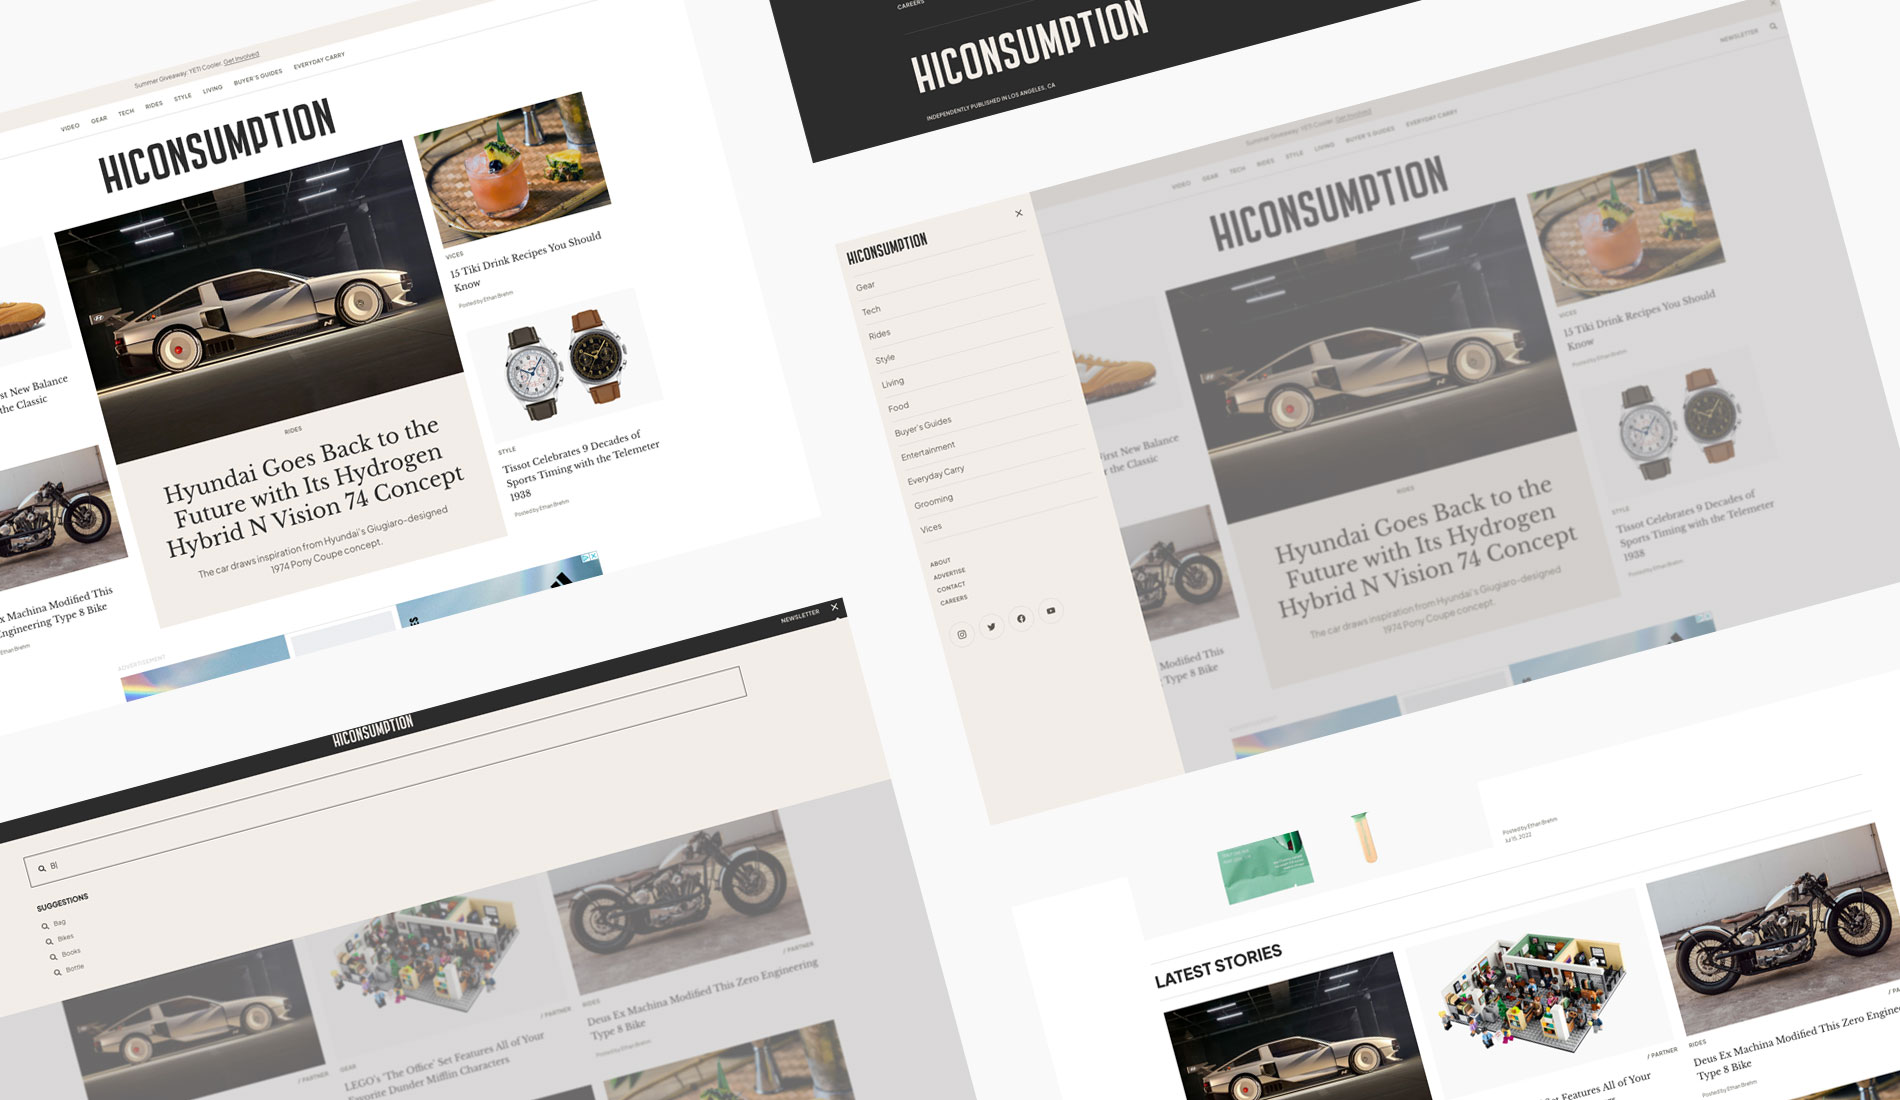 HICONSUMPTION custom Wordpress theme by London web design agency Fhoke